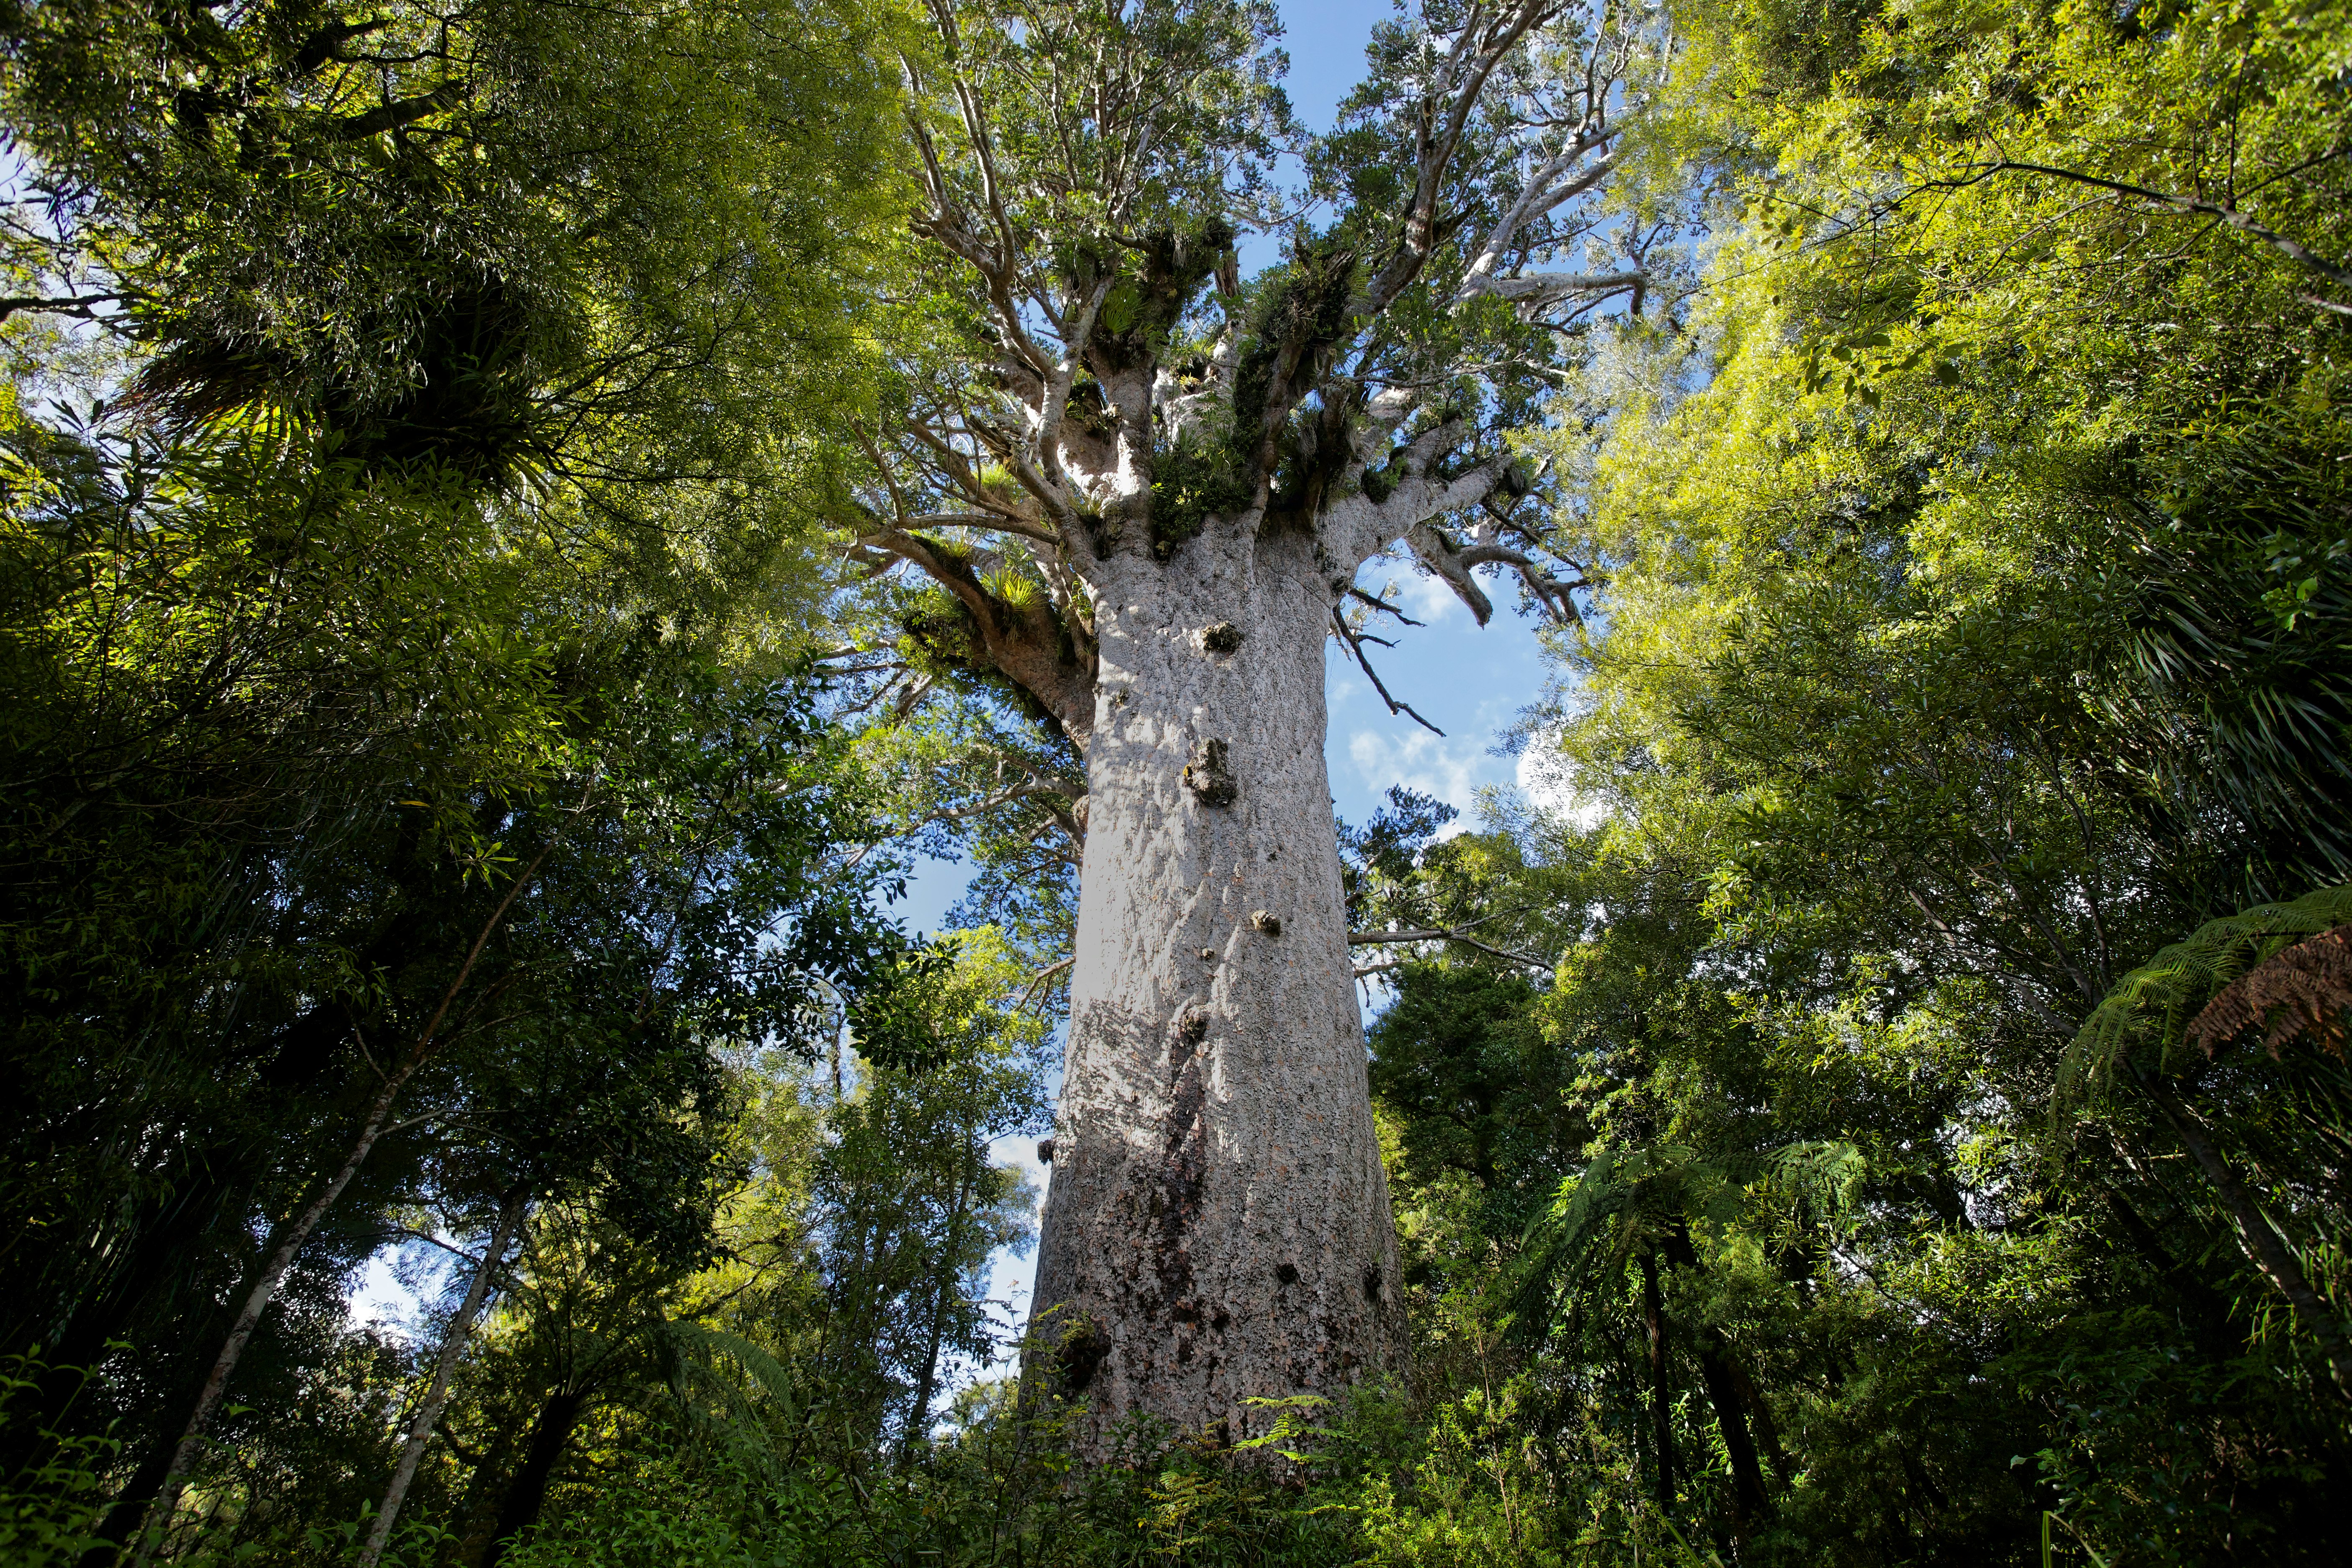 Tāne Mahuta, the giant kauri tree in the Waipoua Forest of Northland Region